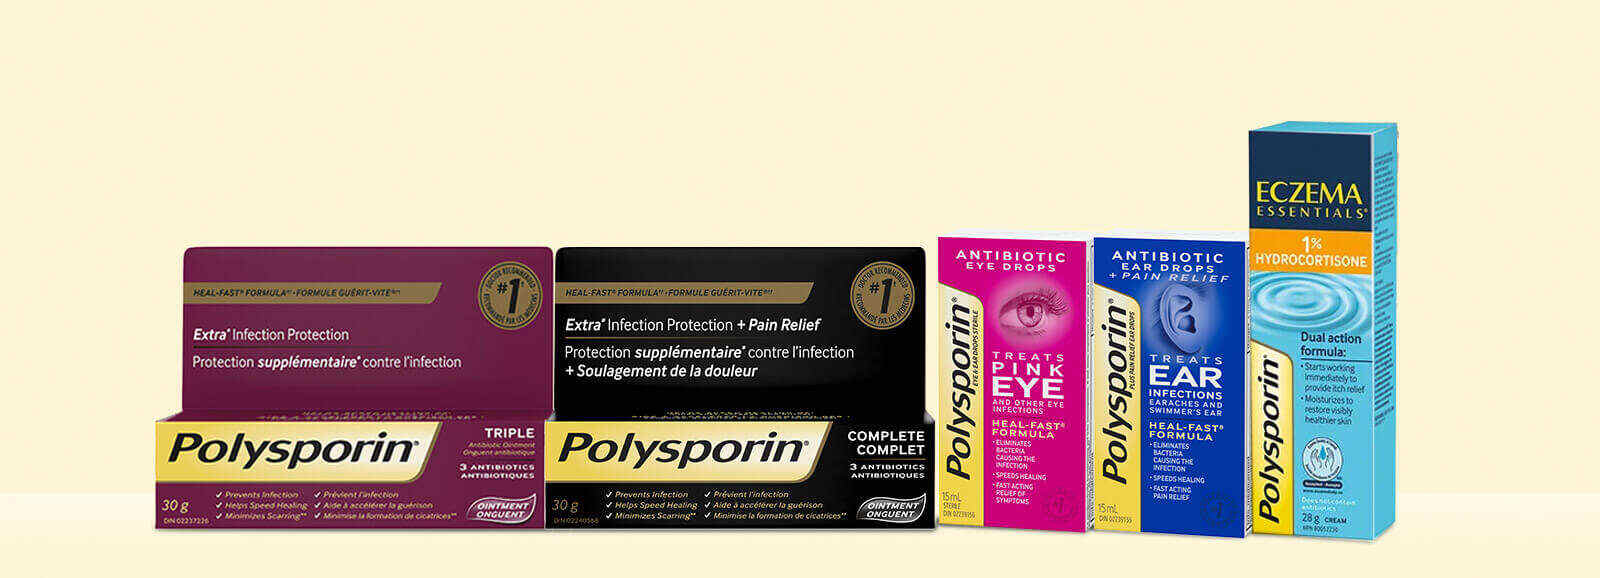 the polysporin product lineup